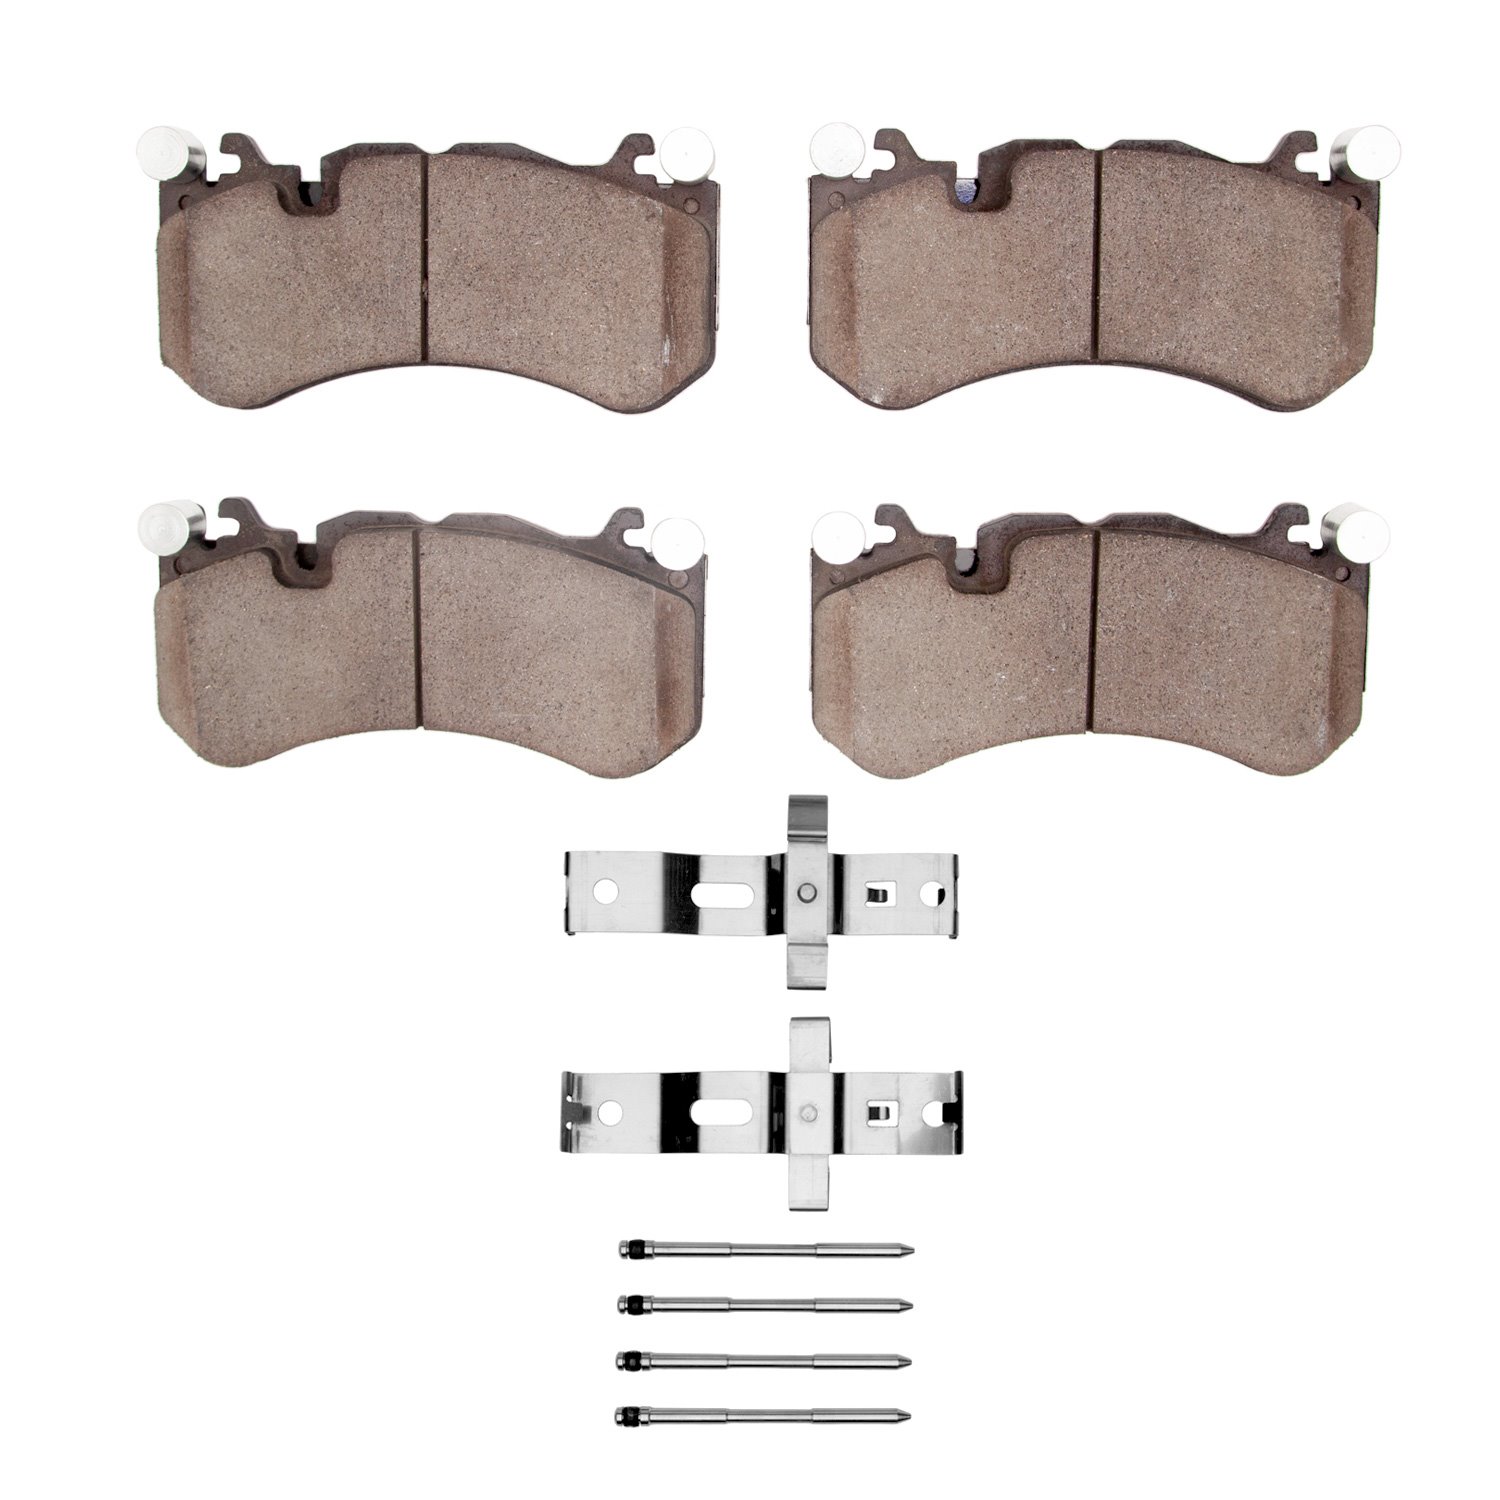 1310-1291-01 3000-Series Ceramic Brake Pads & Hardware Kit, Fits Select Multiple Makes/Models, Position: Front